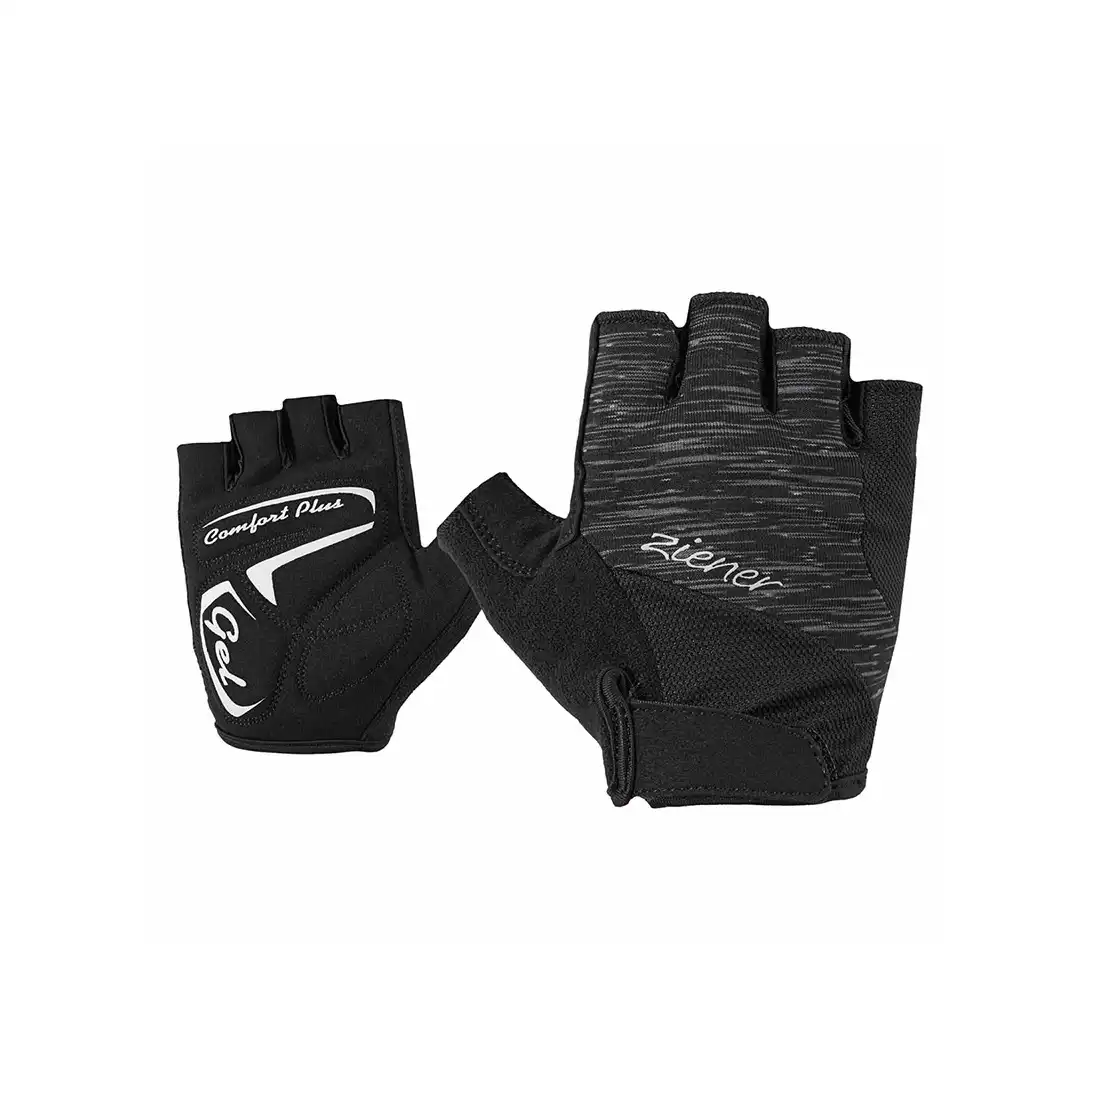 ZIENER CACI Women's cycling gloves, black melange